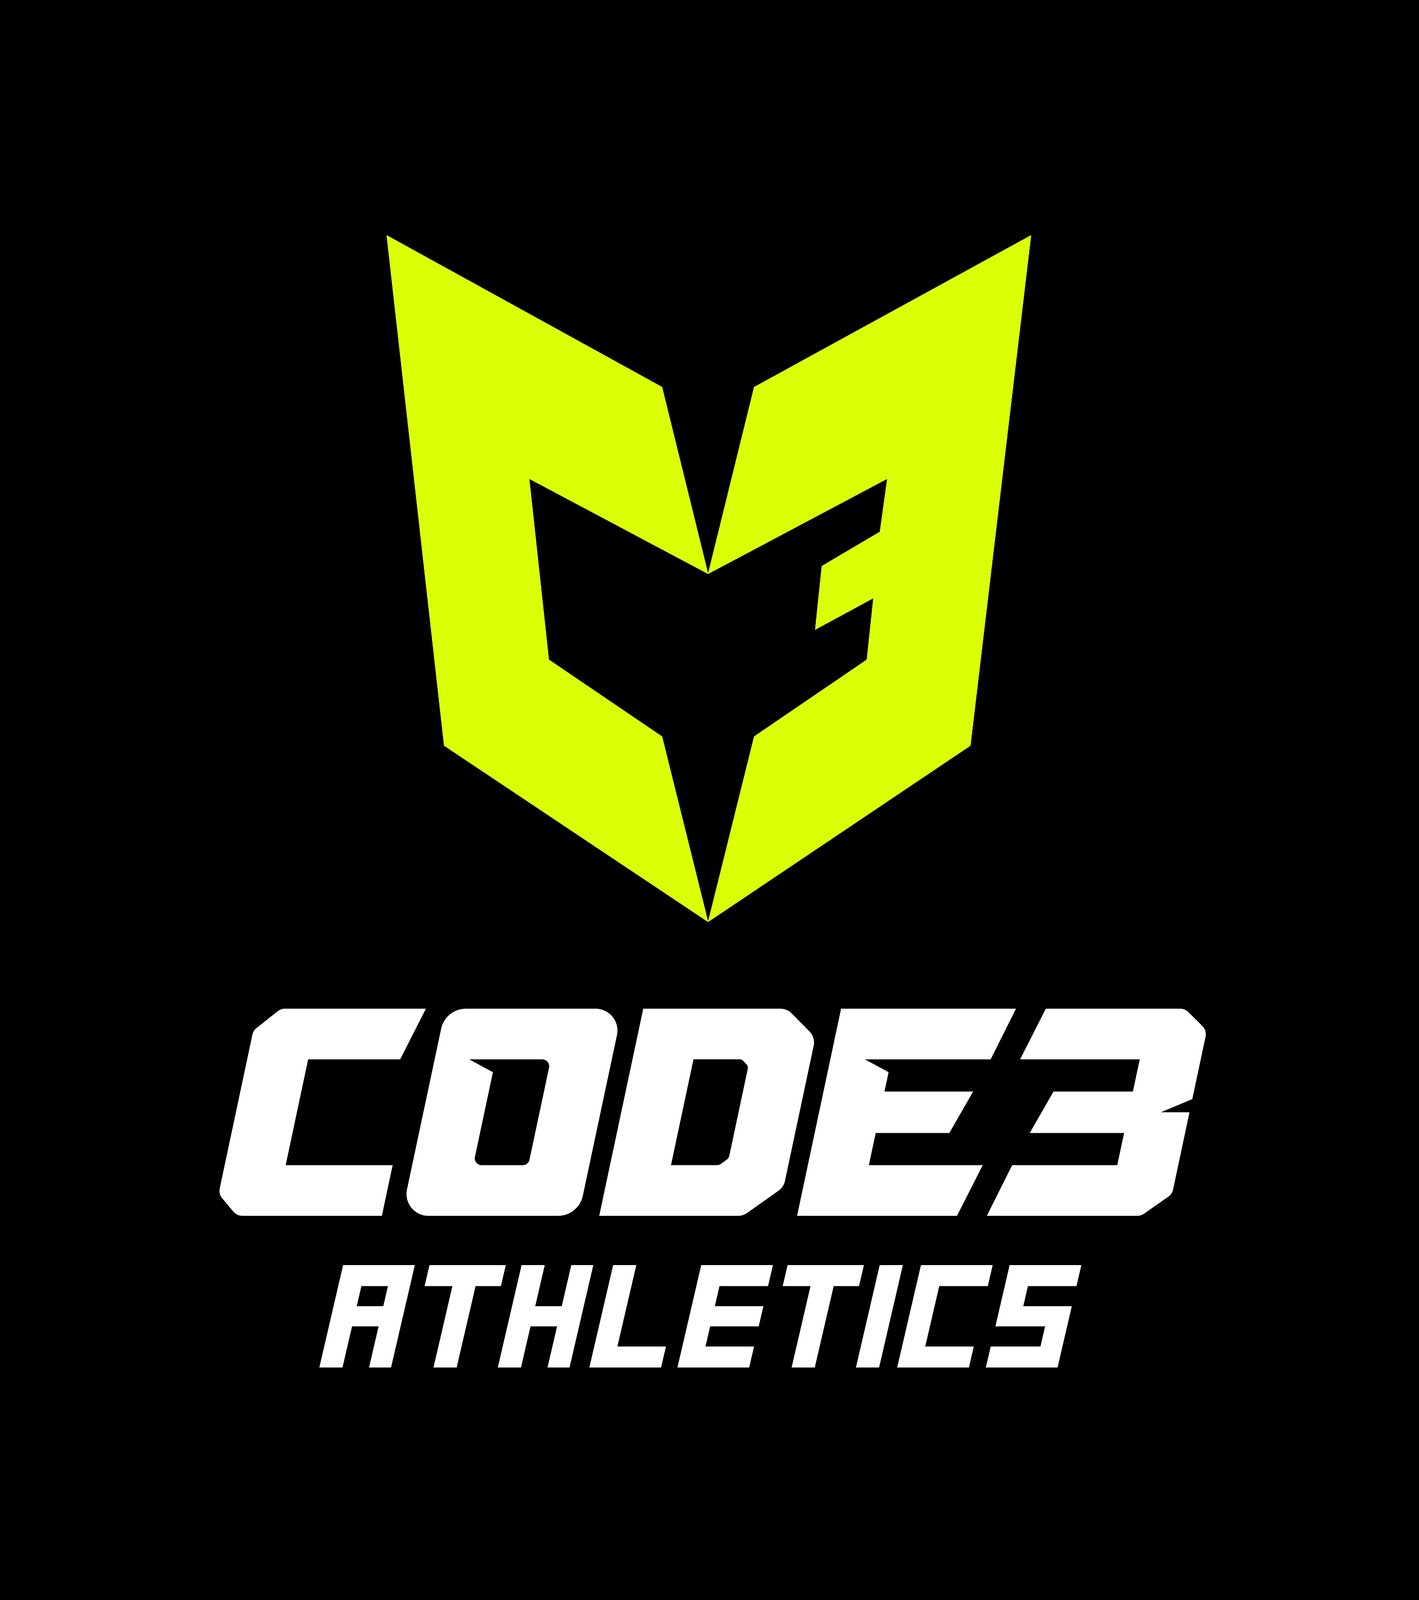 Code 3 Athletics